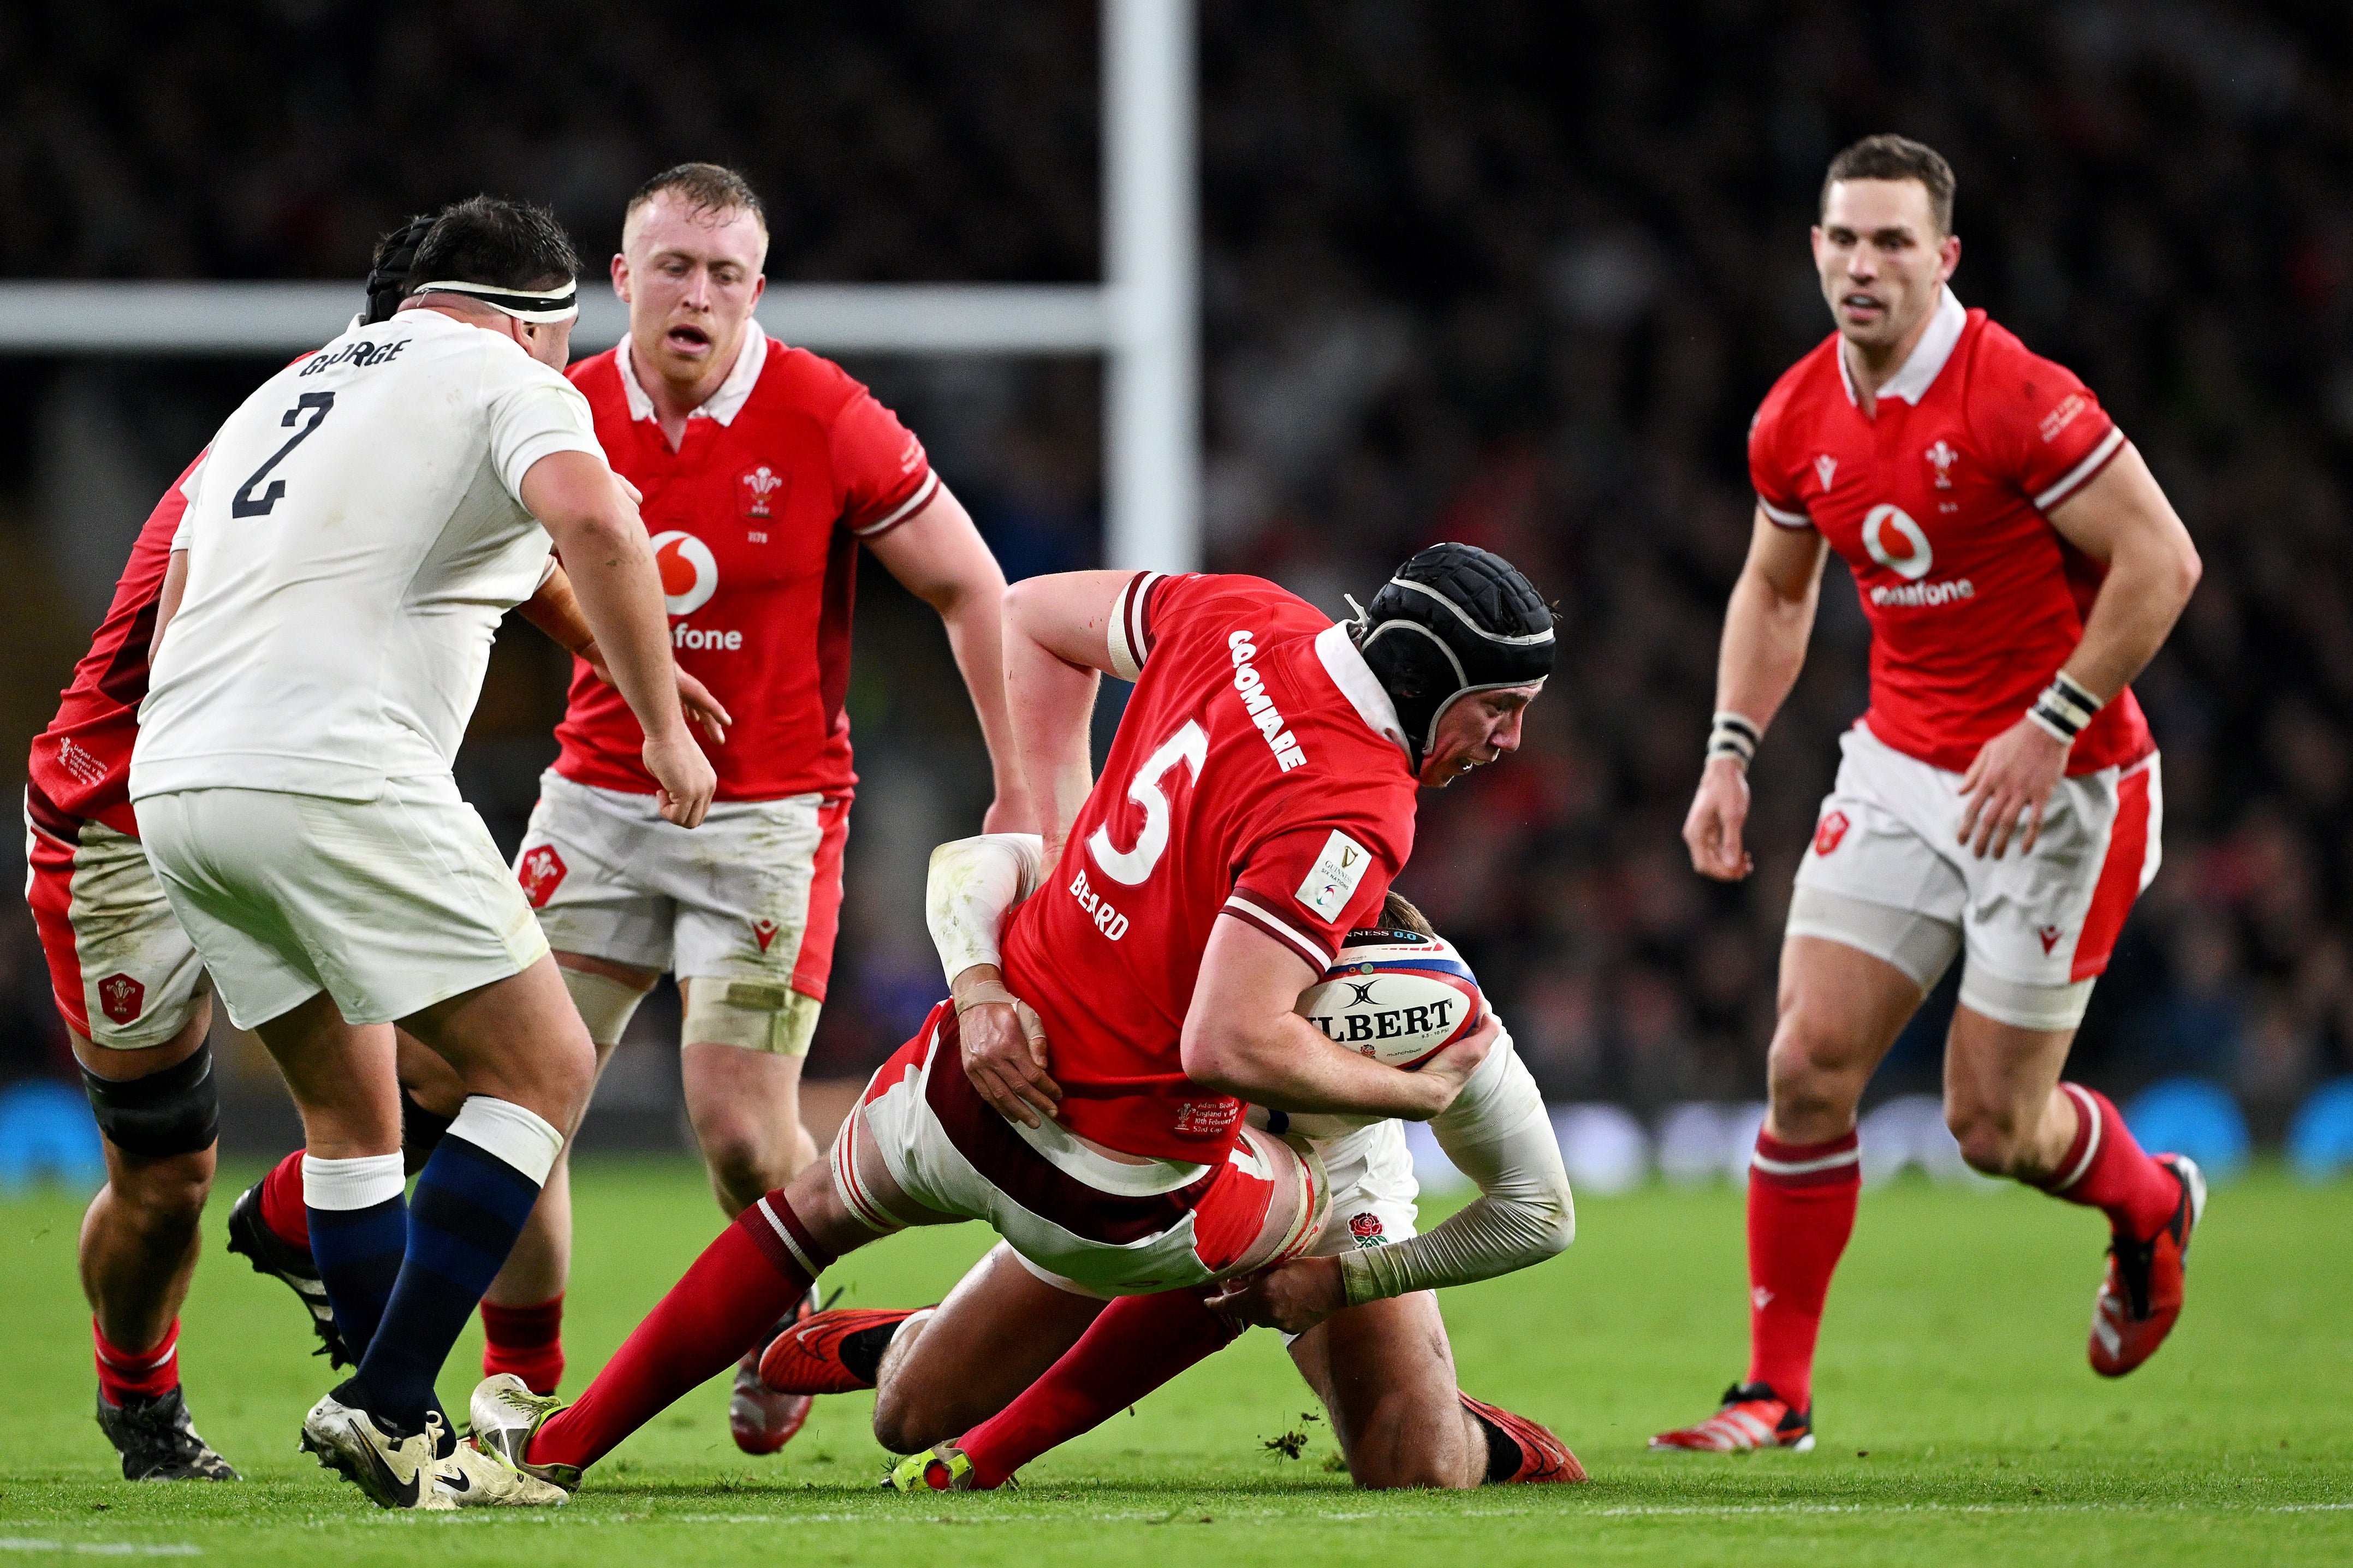 England’s aggressive blitz defence stifled Wales